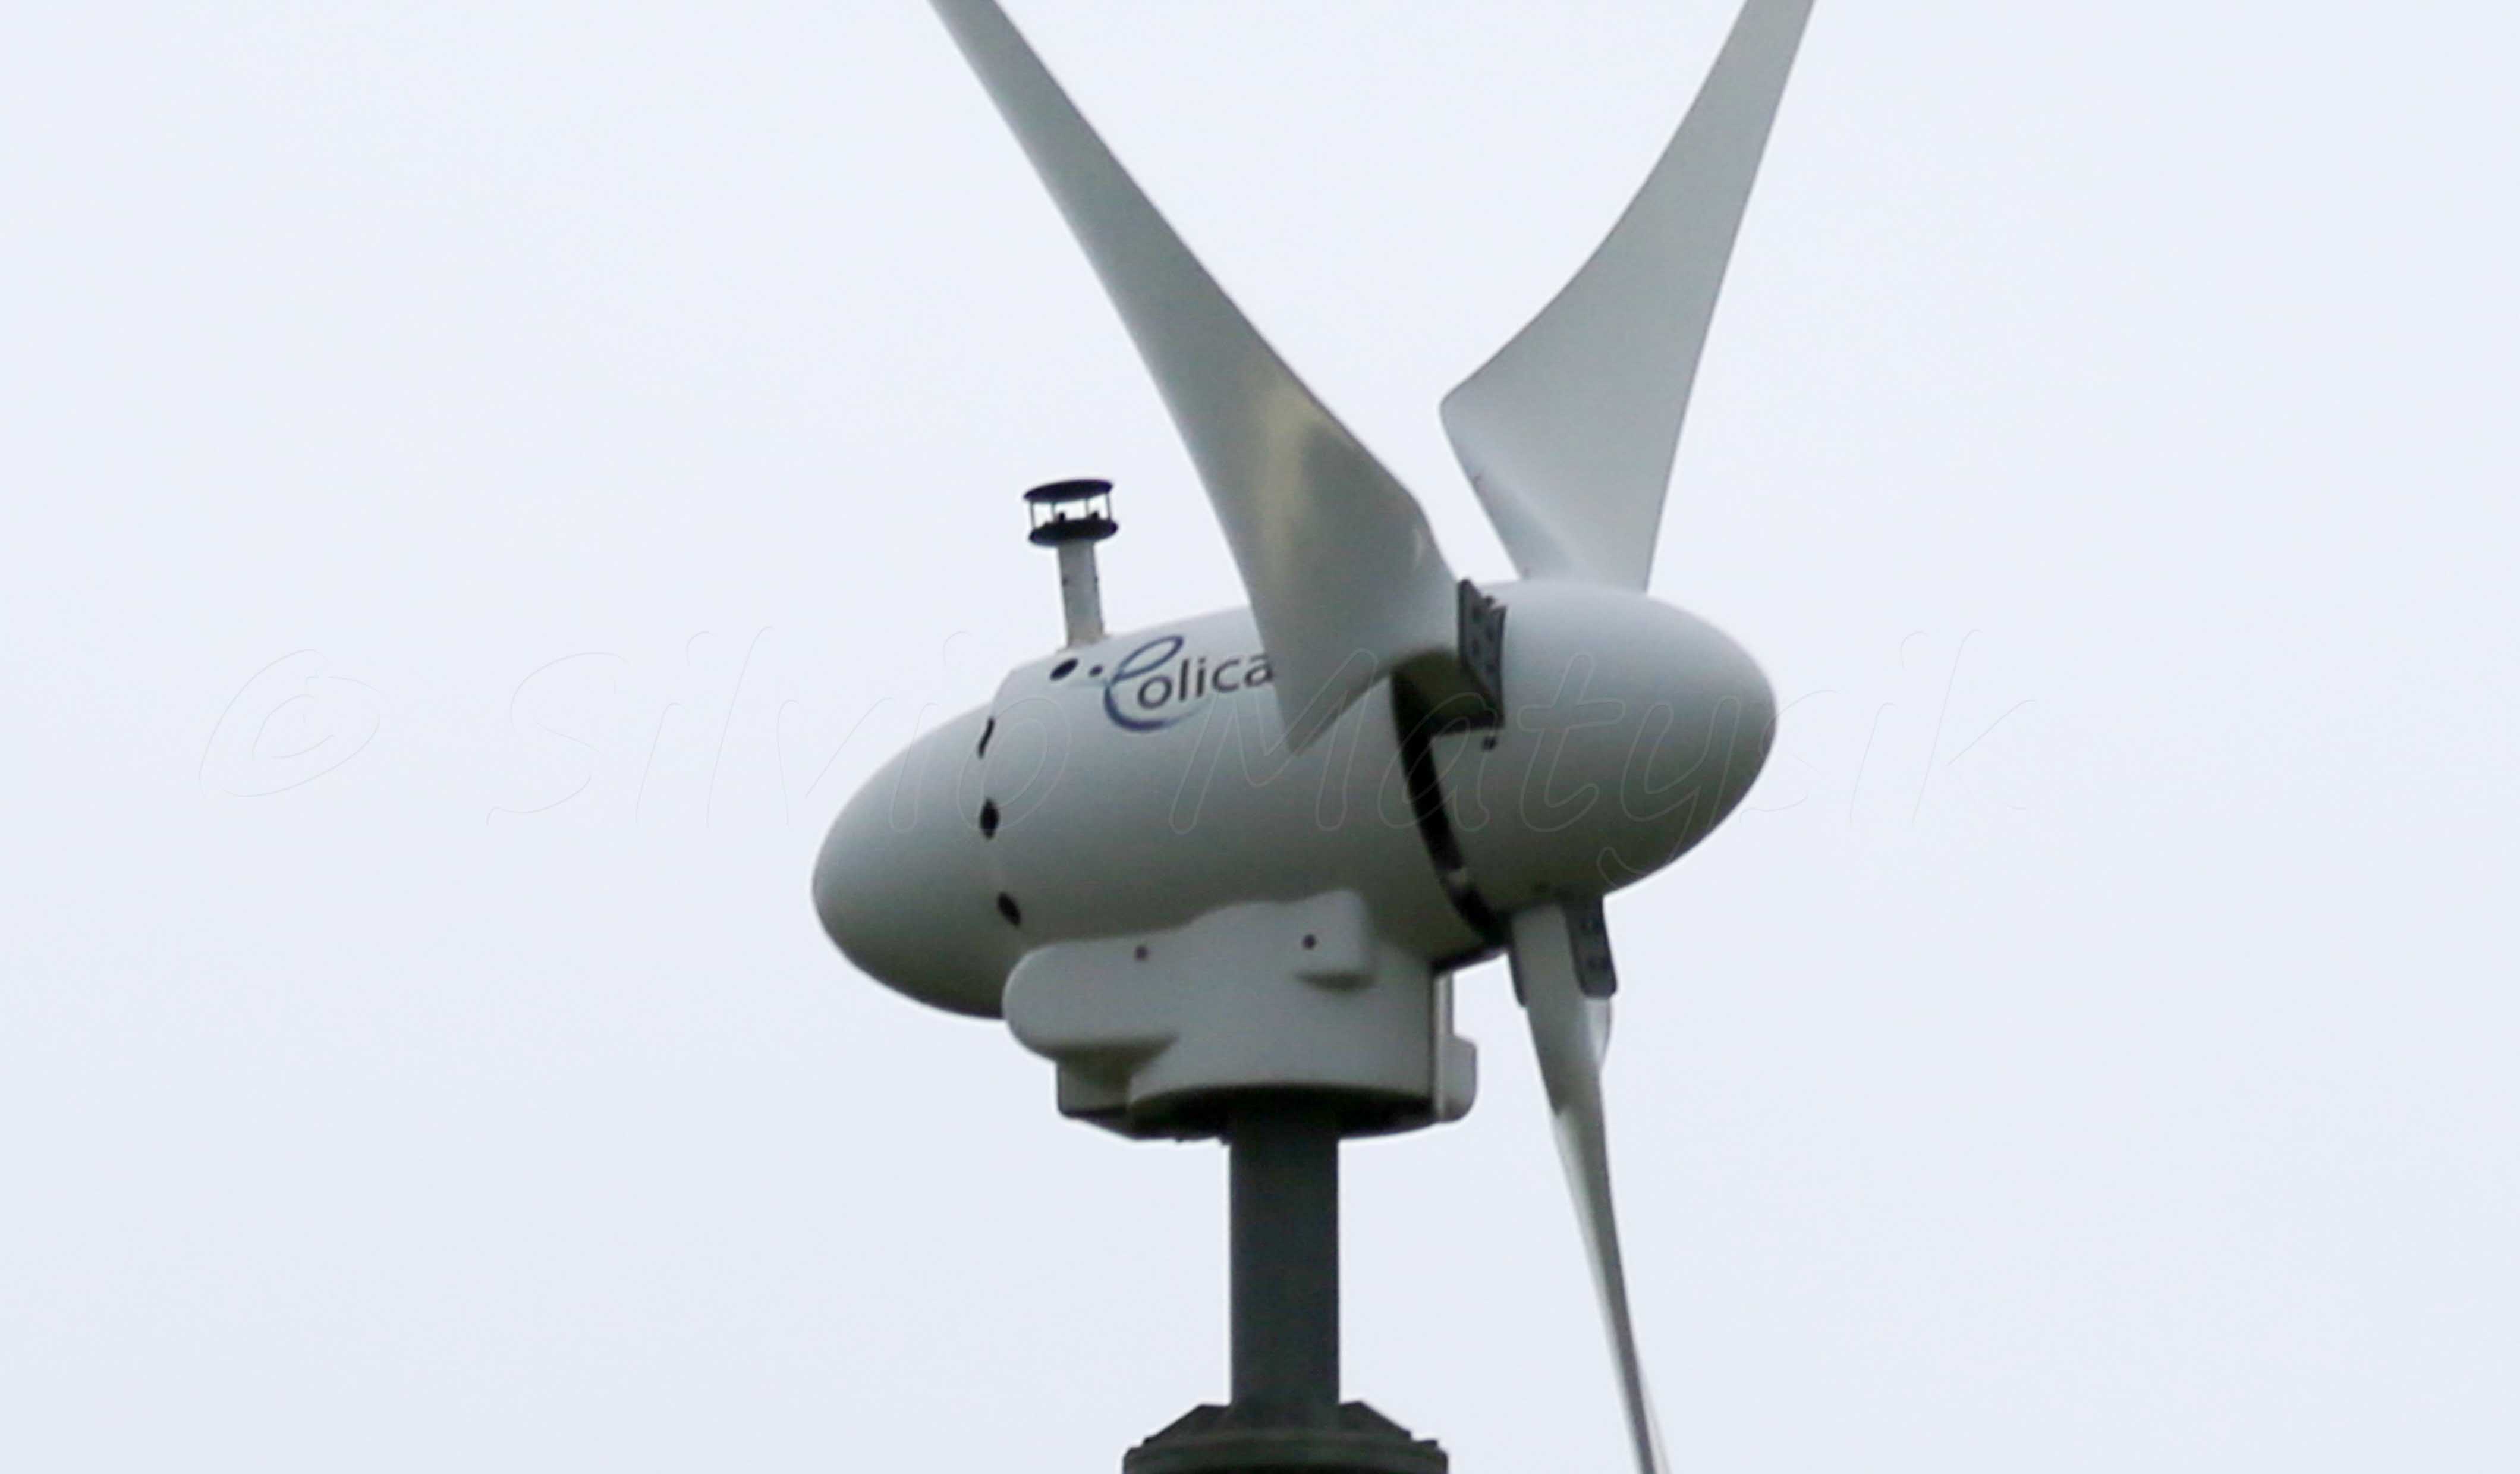 20 KW PELTON Turbine Windgenerator Generator Windrad Wasserrad